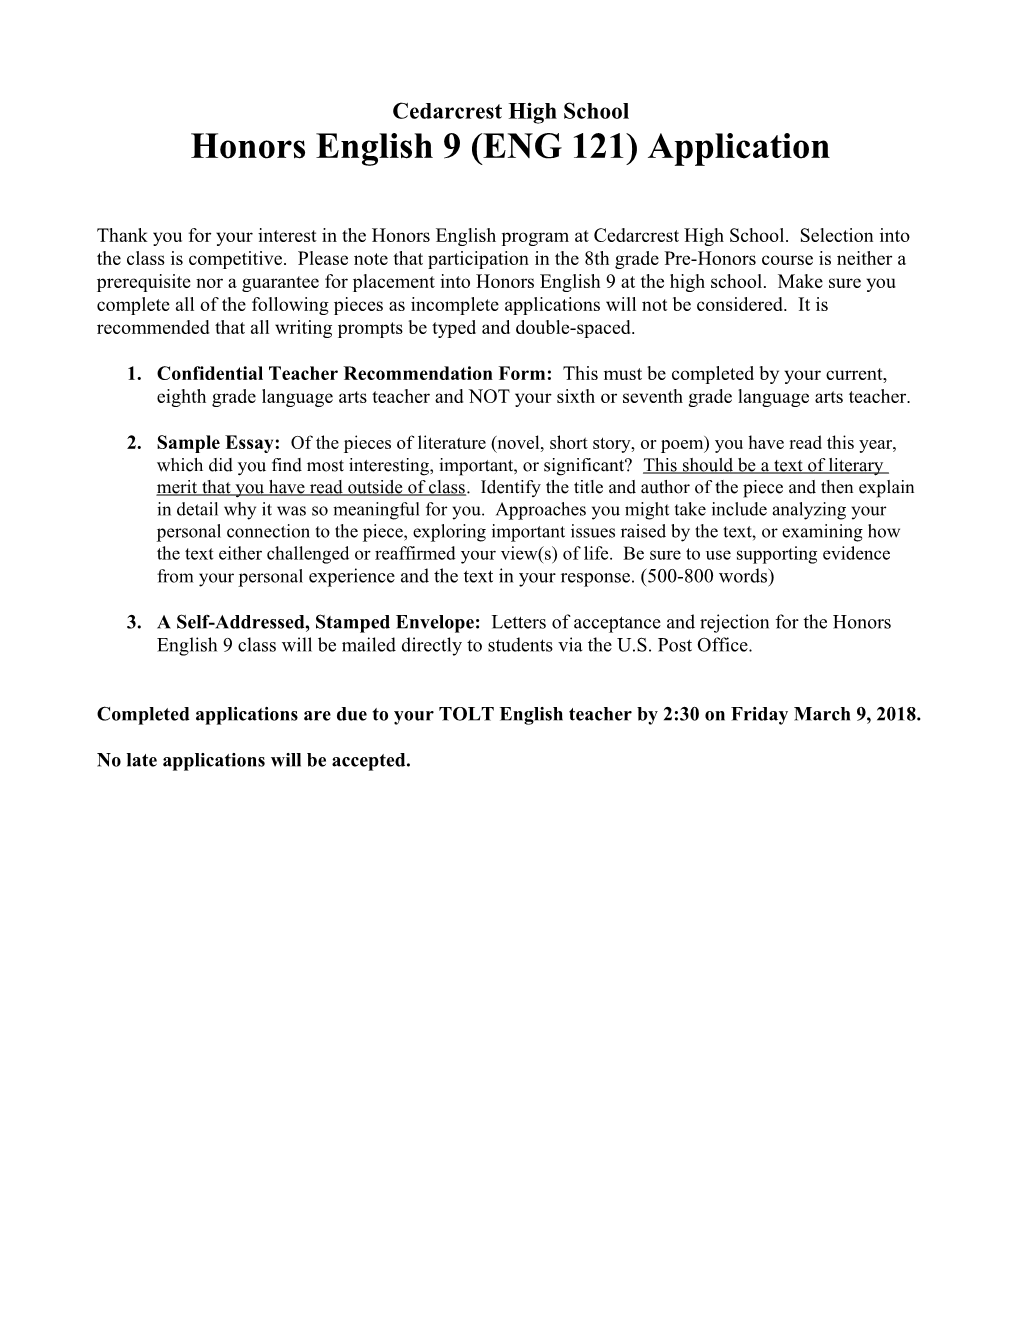 Cedarcrest High School Honors English 9 (ENG 121) Application